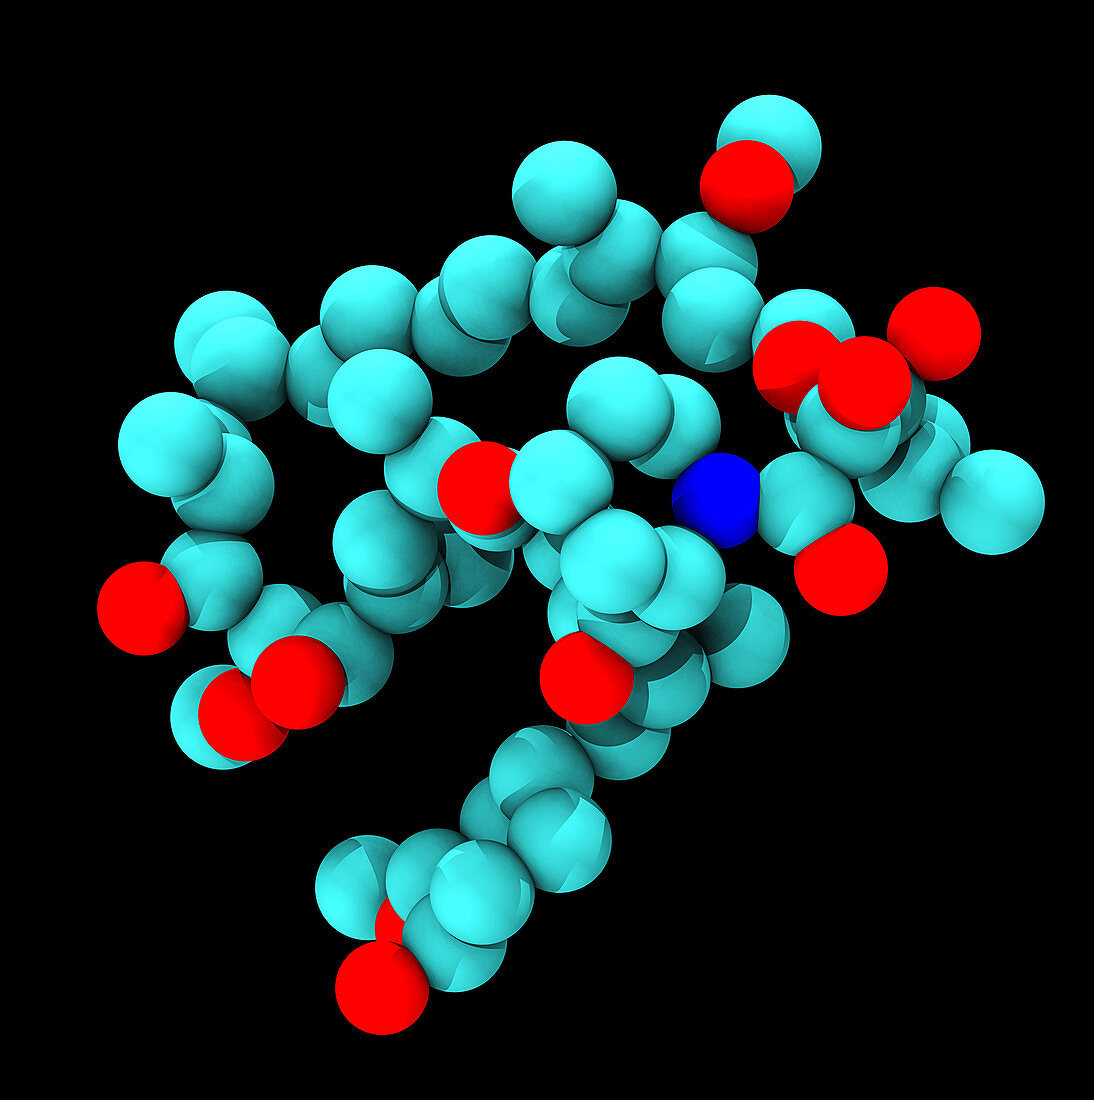 Sirolimus (Rapamycin), Molecular Model